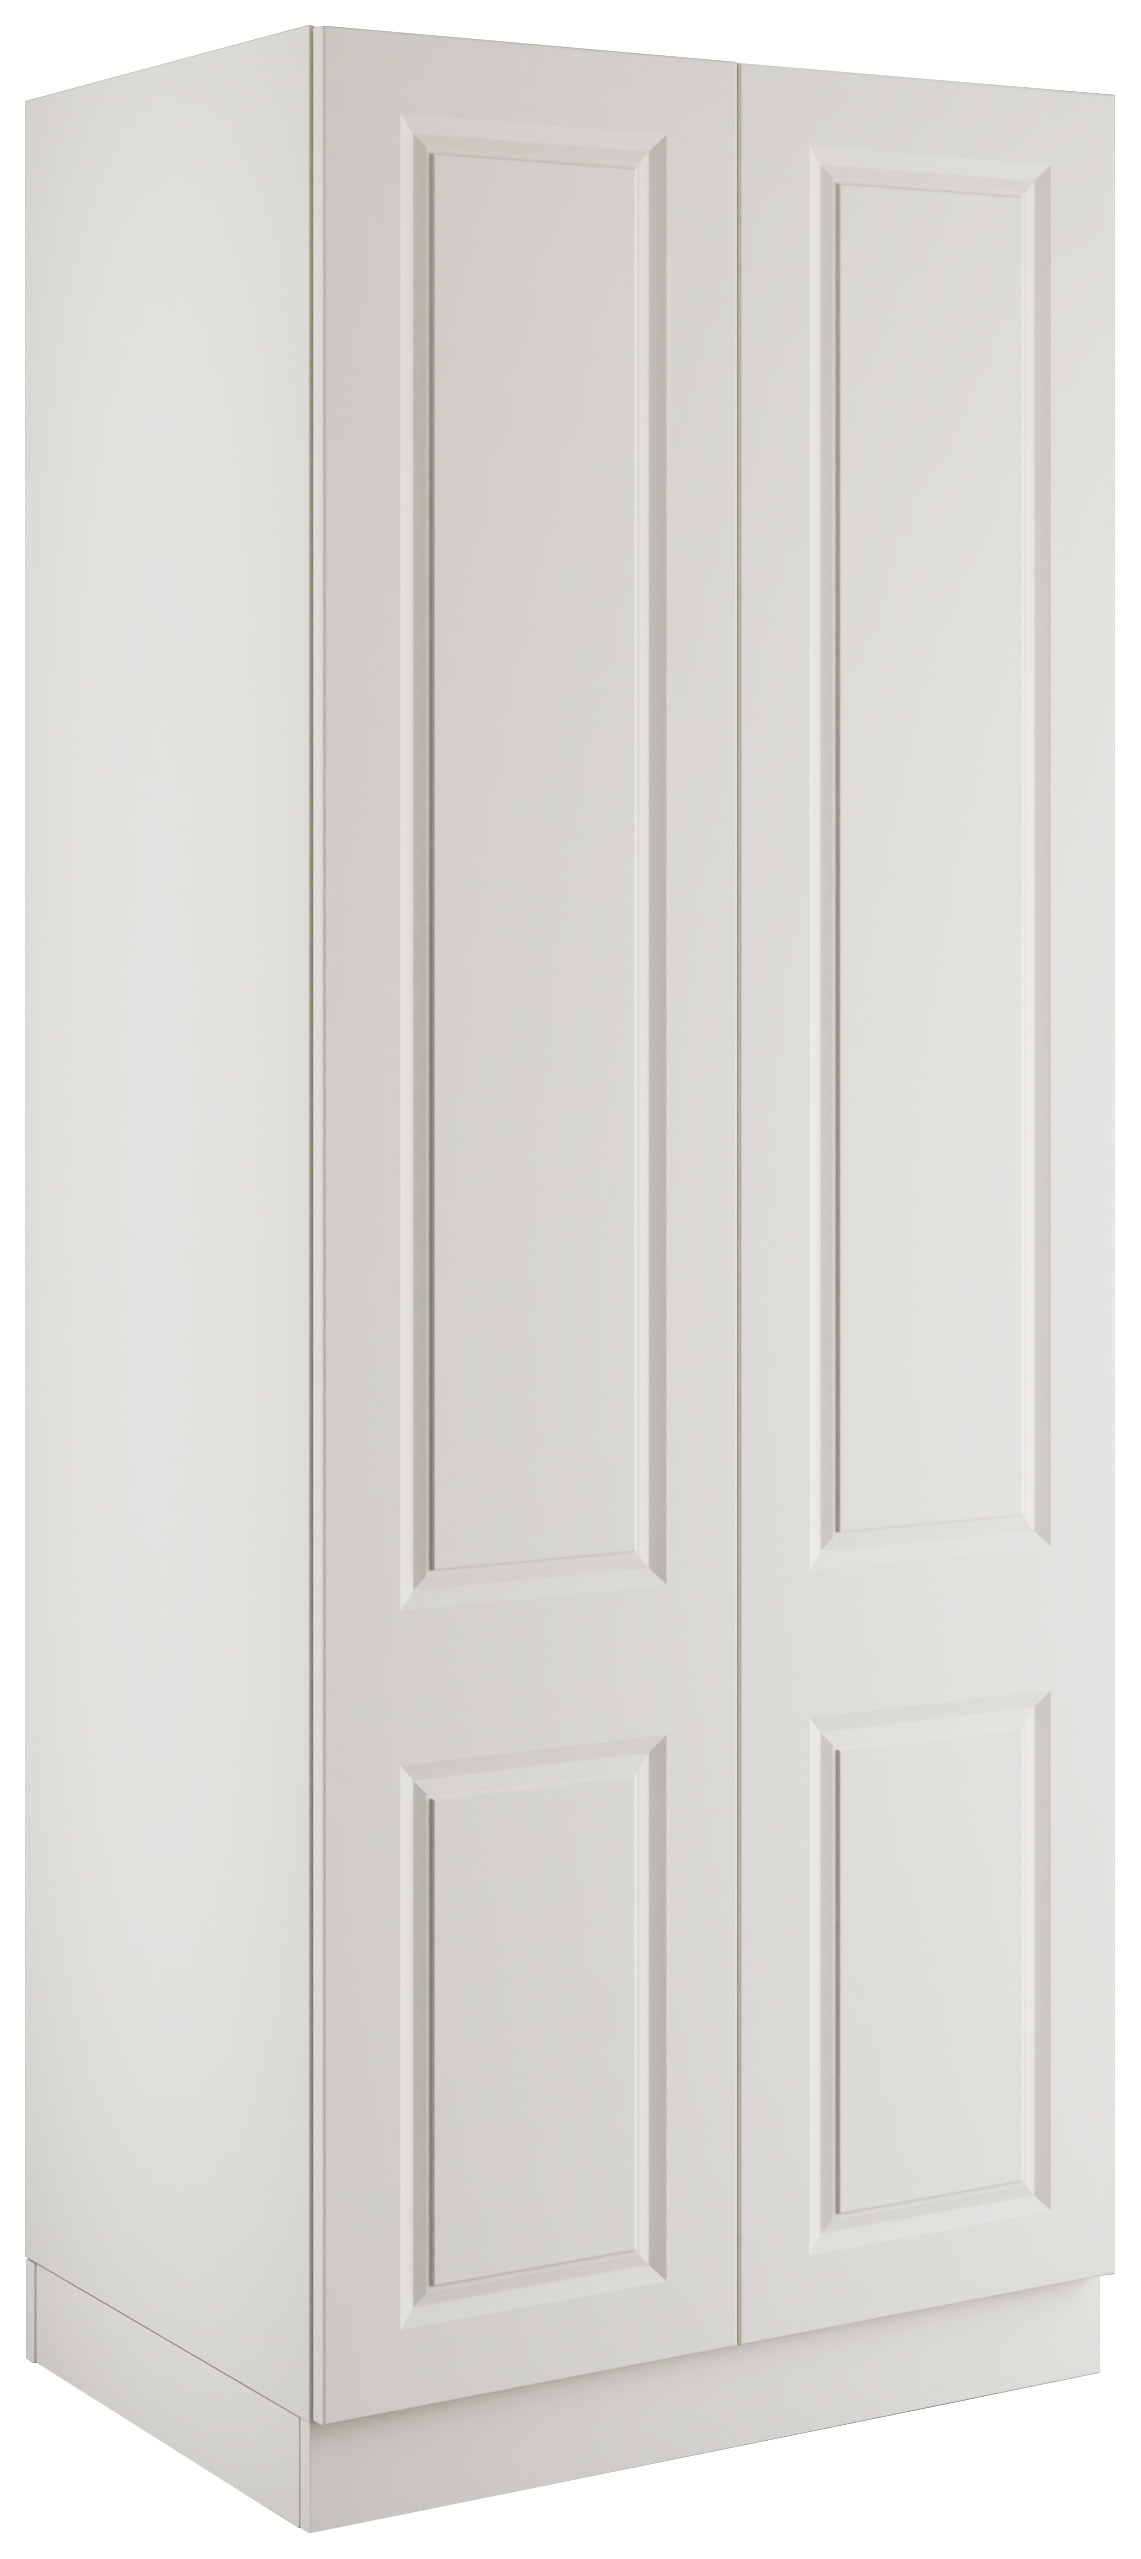 Harrogate White Double Wardrobe with Single Rail & Internal Drawers - 900 x 2260 x 608mm